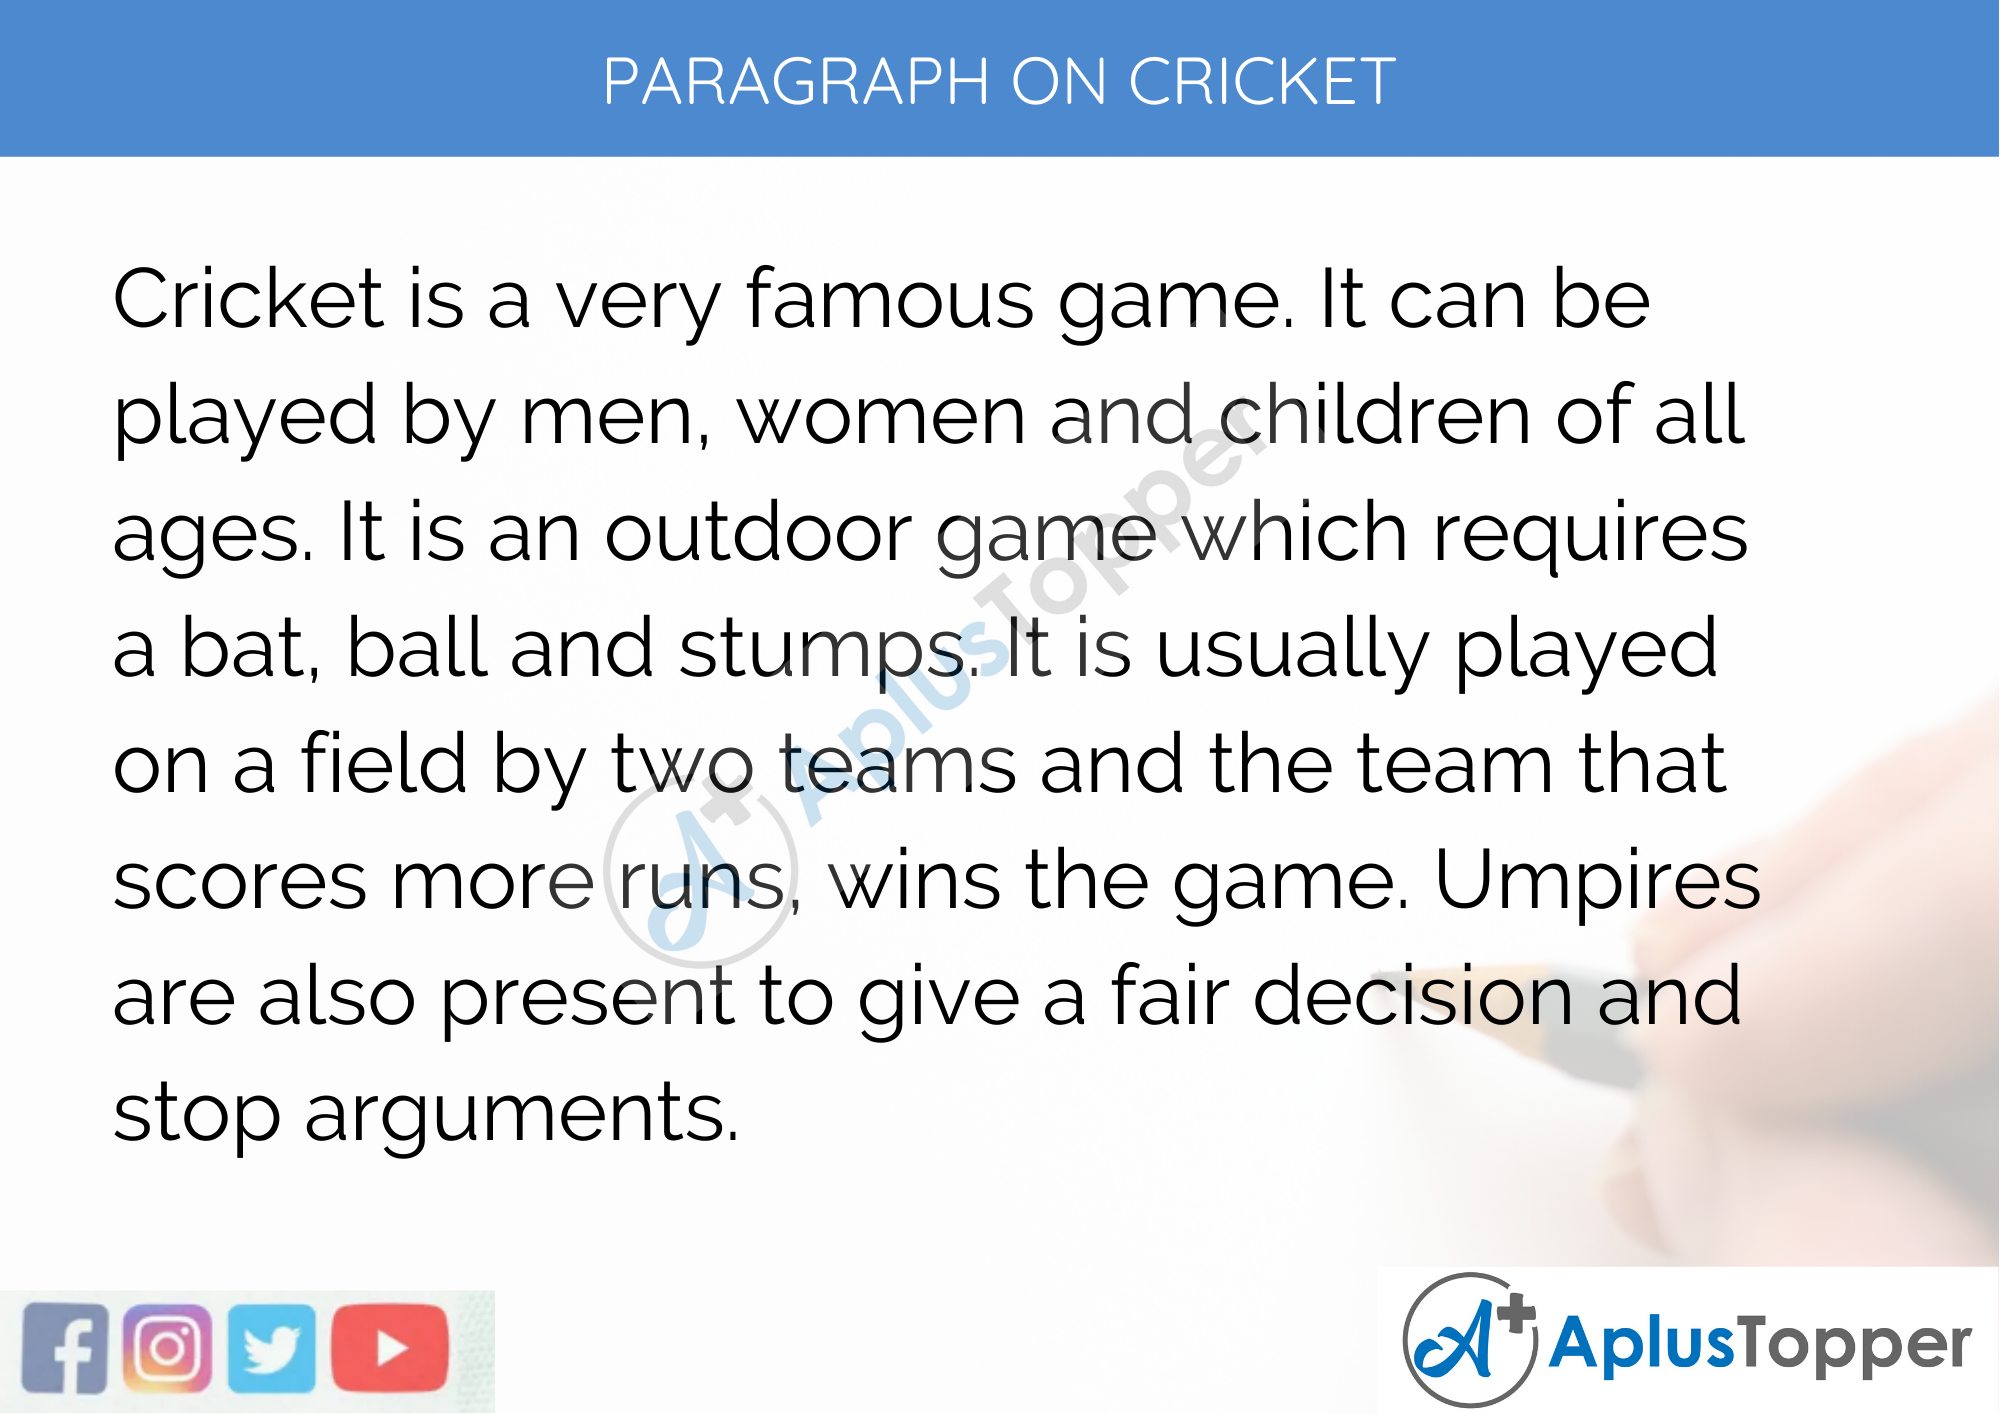 cricket essay images